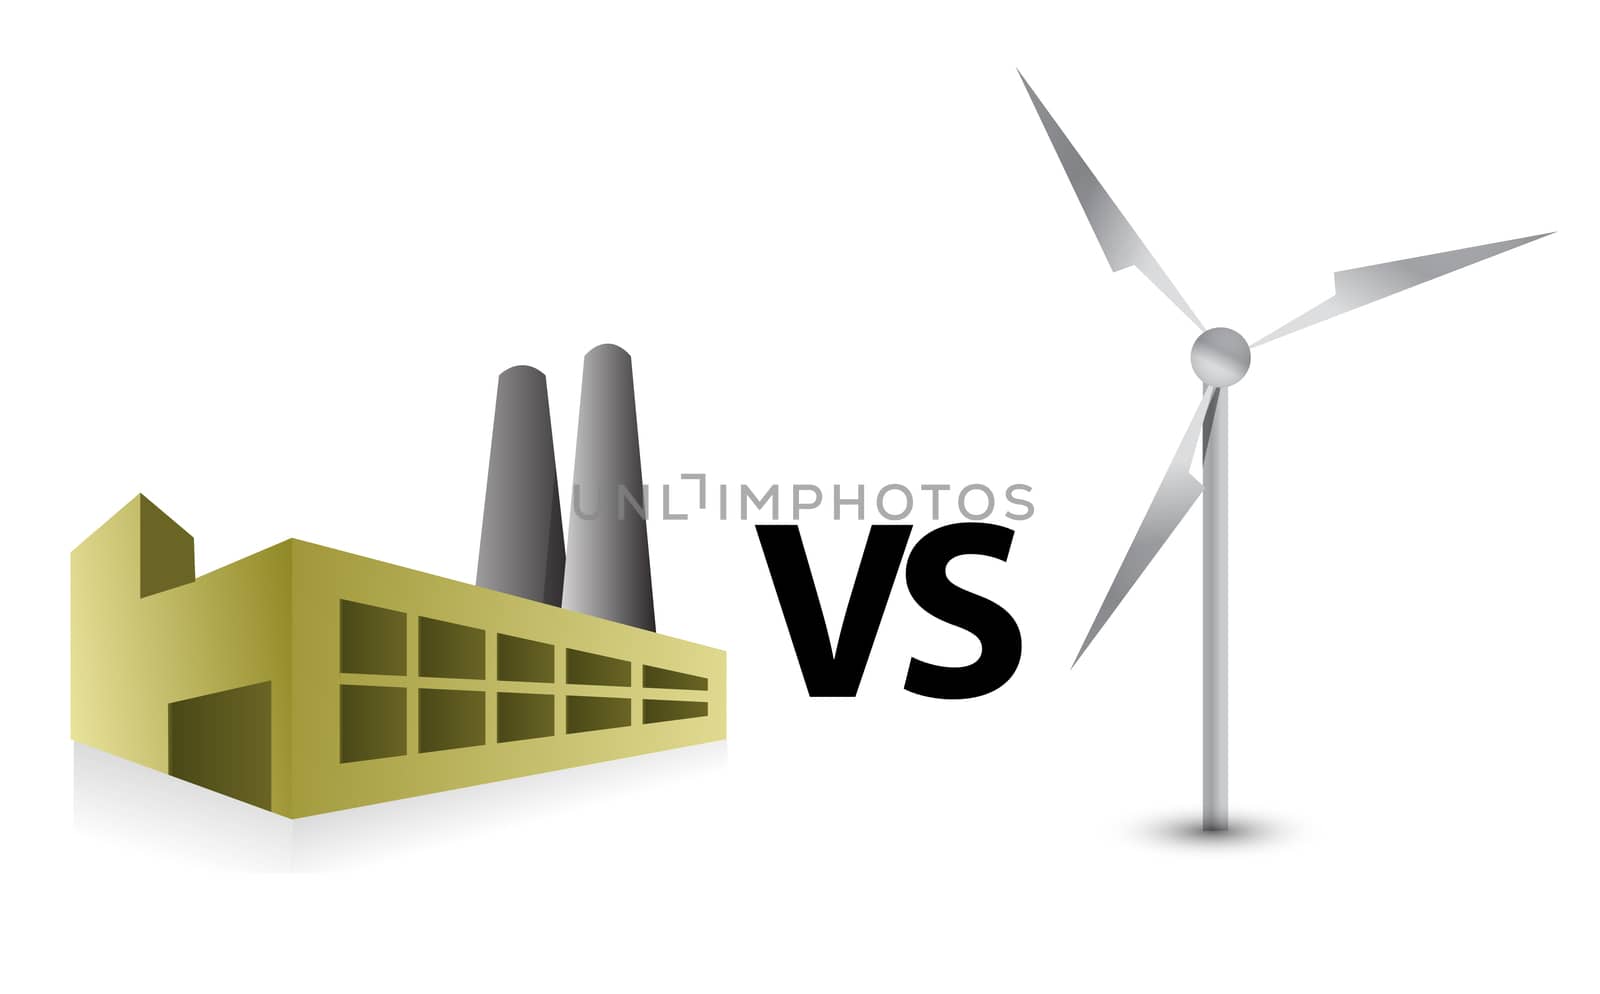 factory vs windmill energy illustration concept design